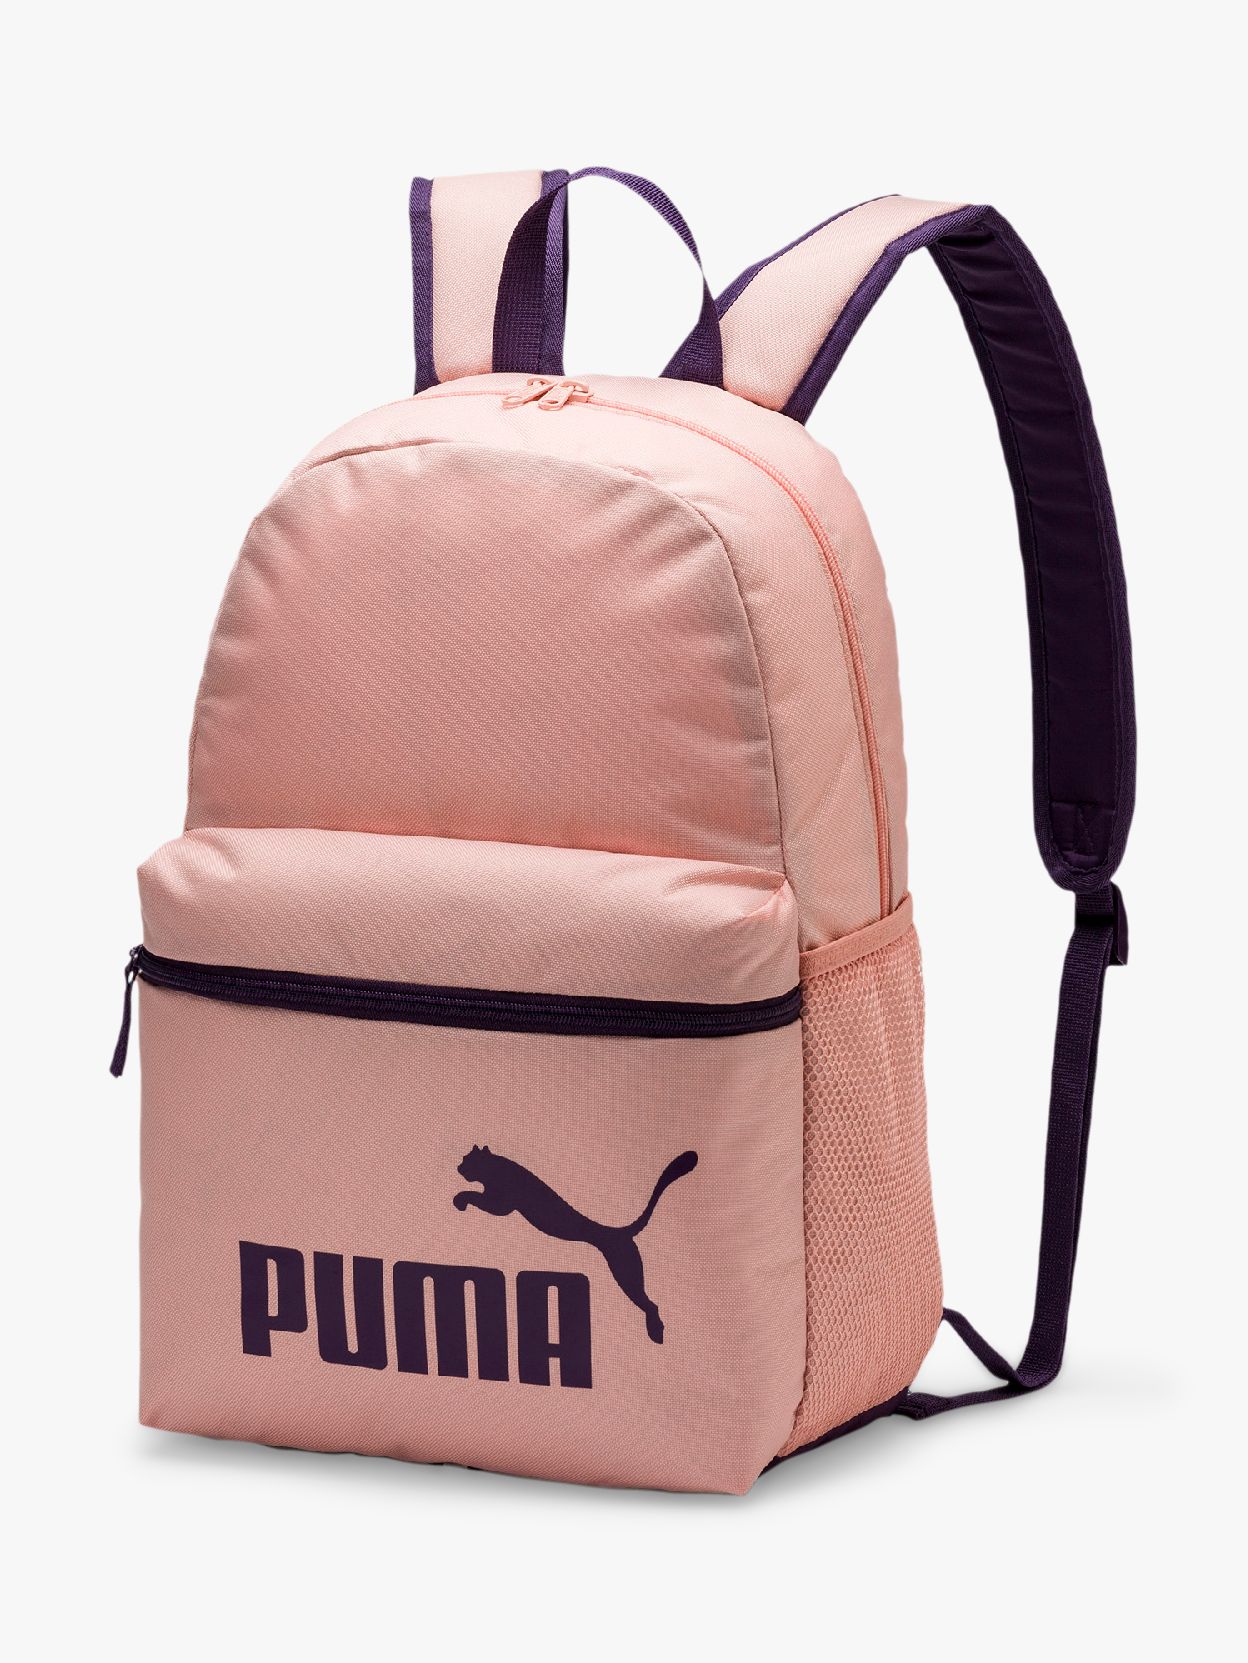 pink and black puma backpack